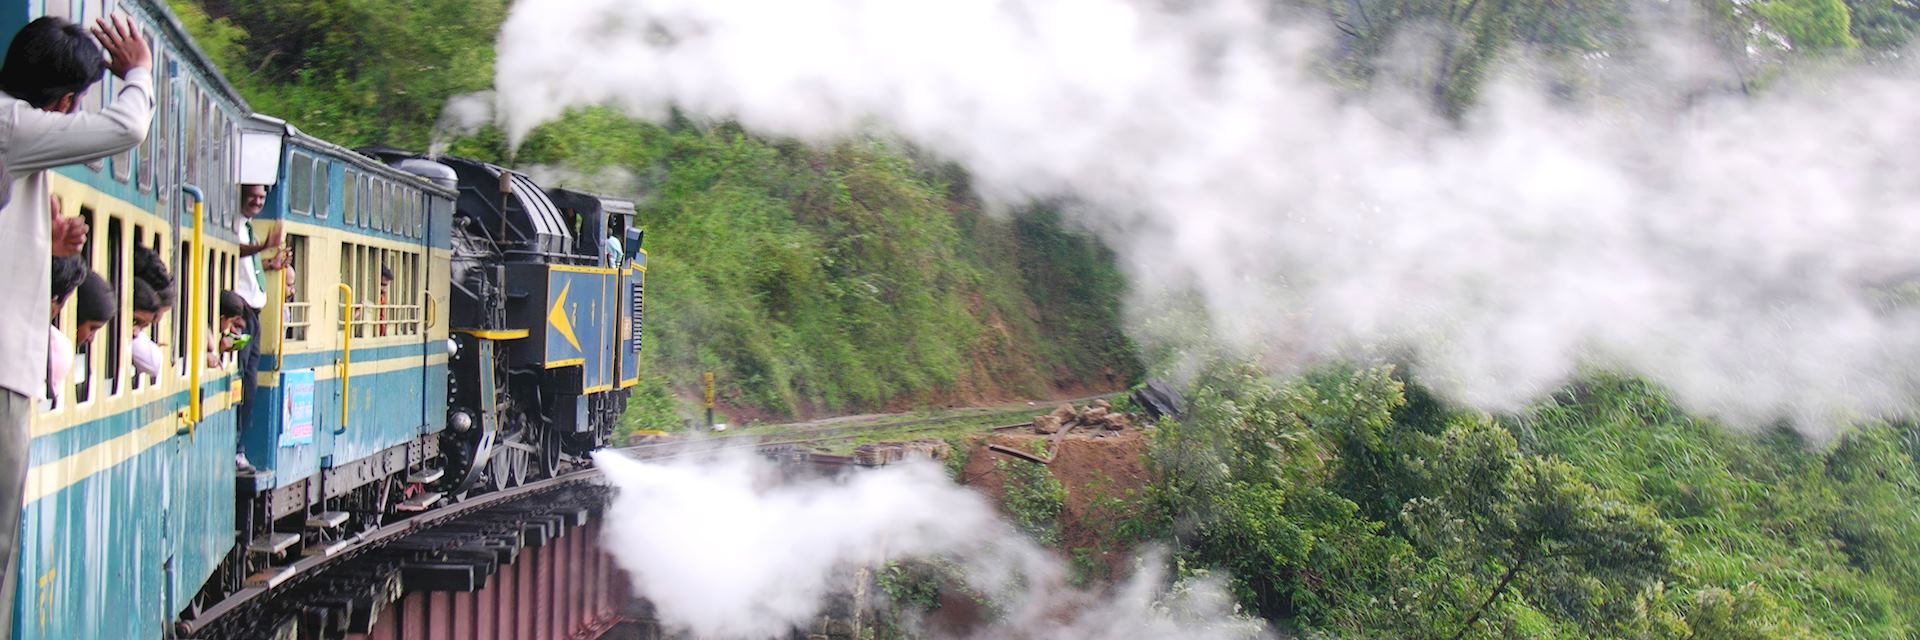 Nilgiri Mountain Railway, India